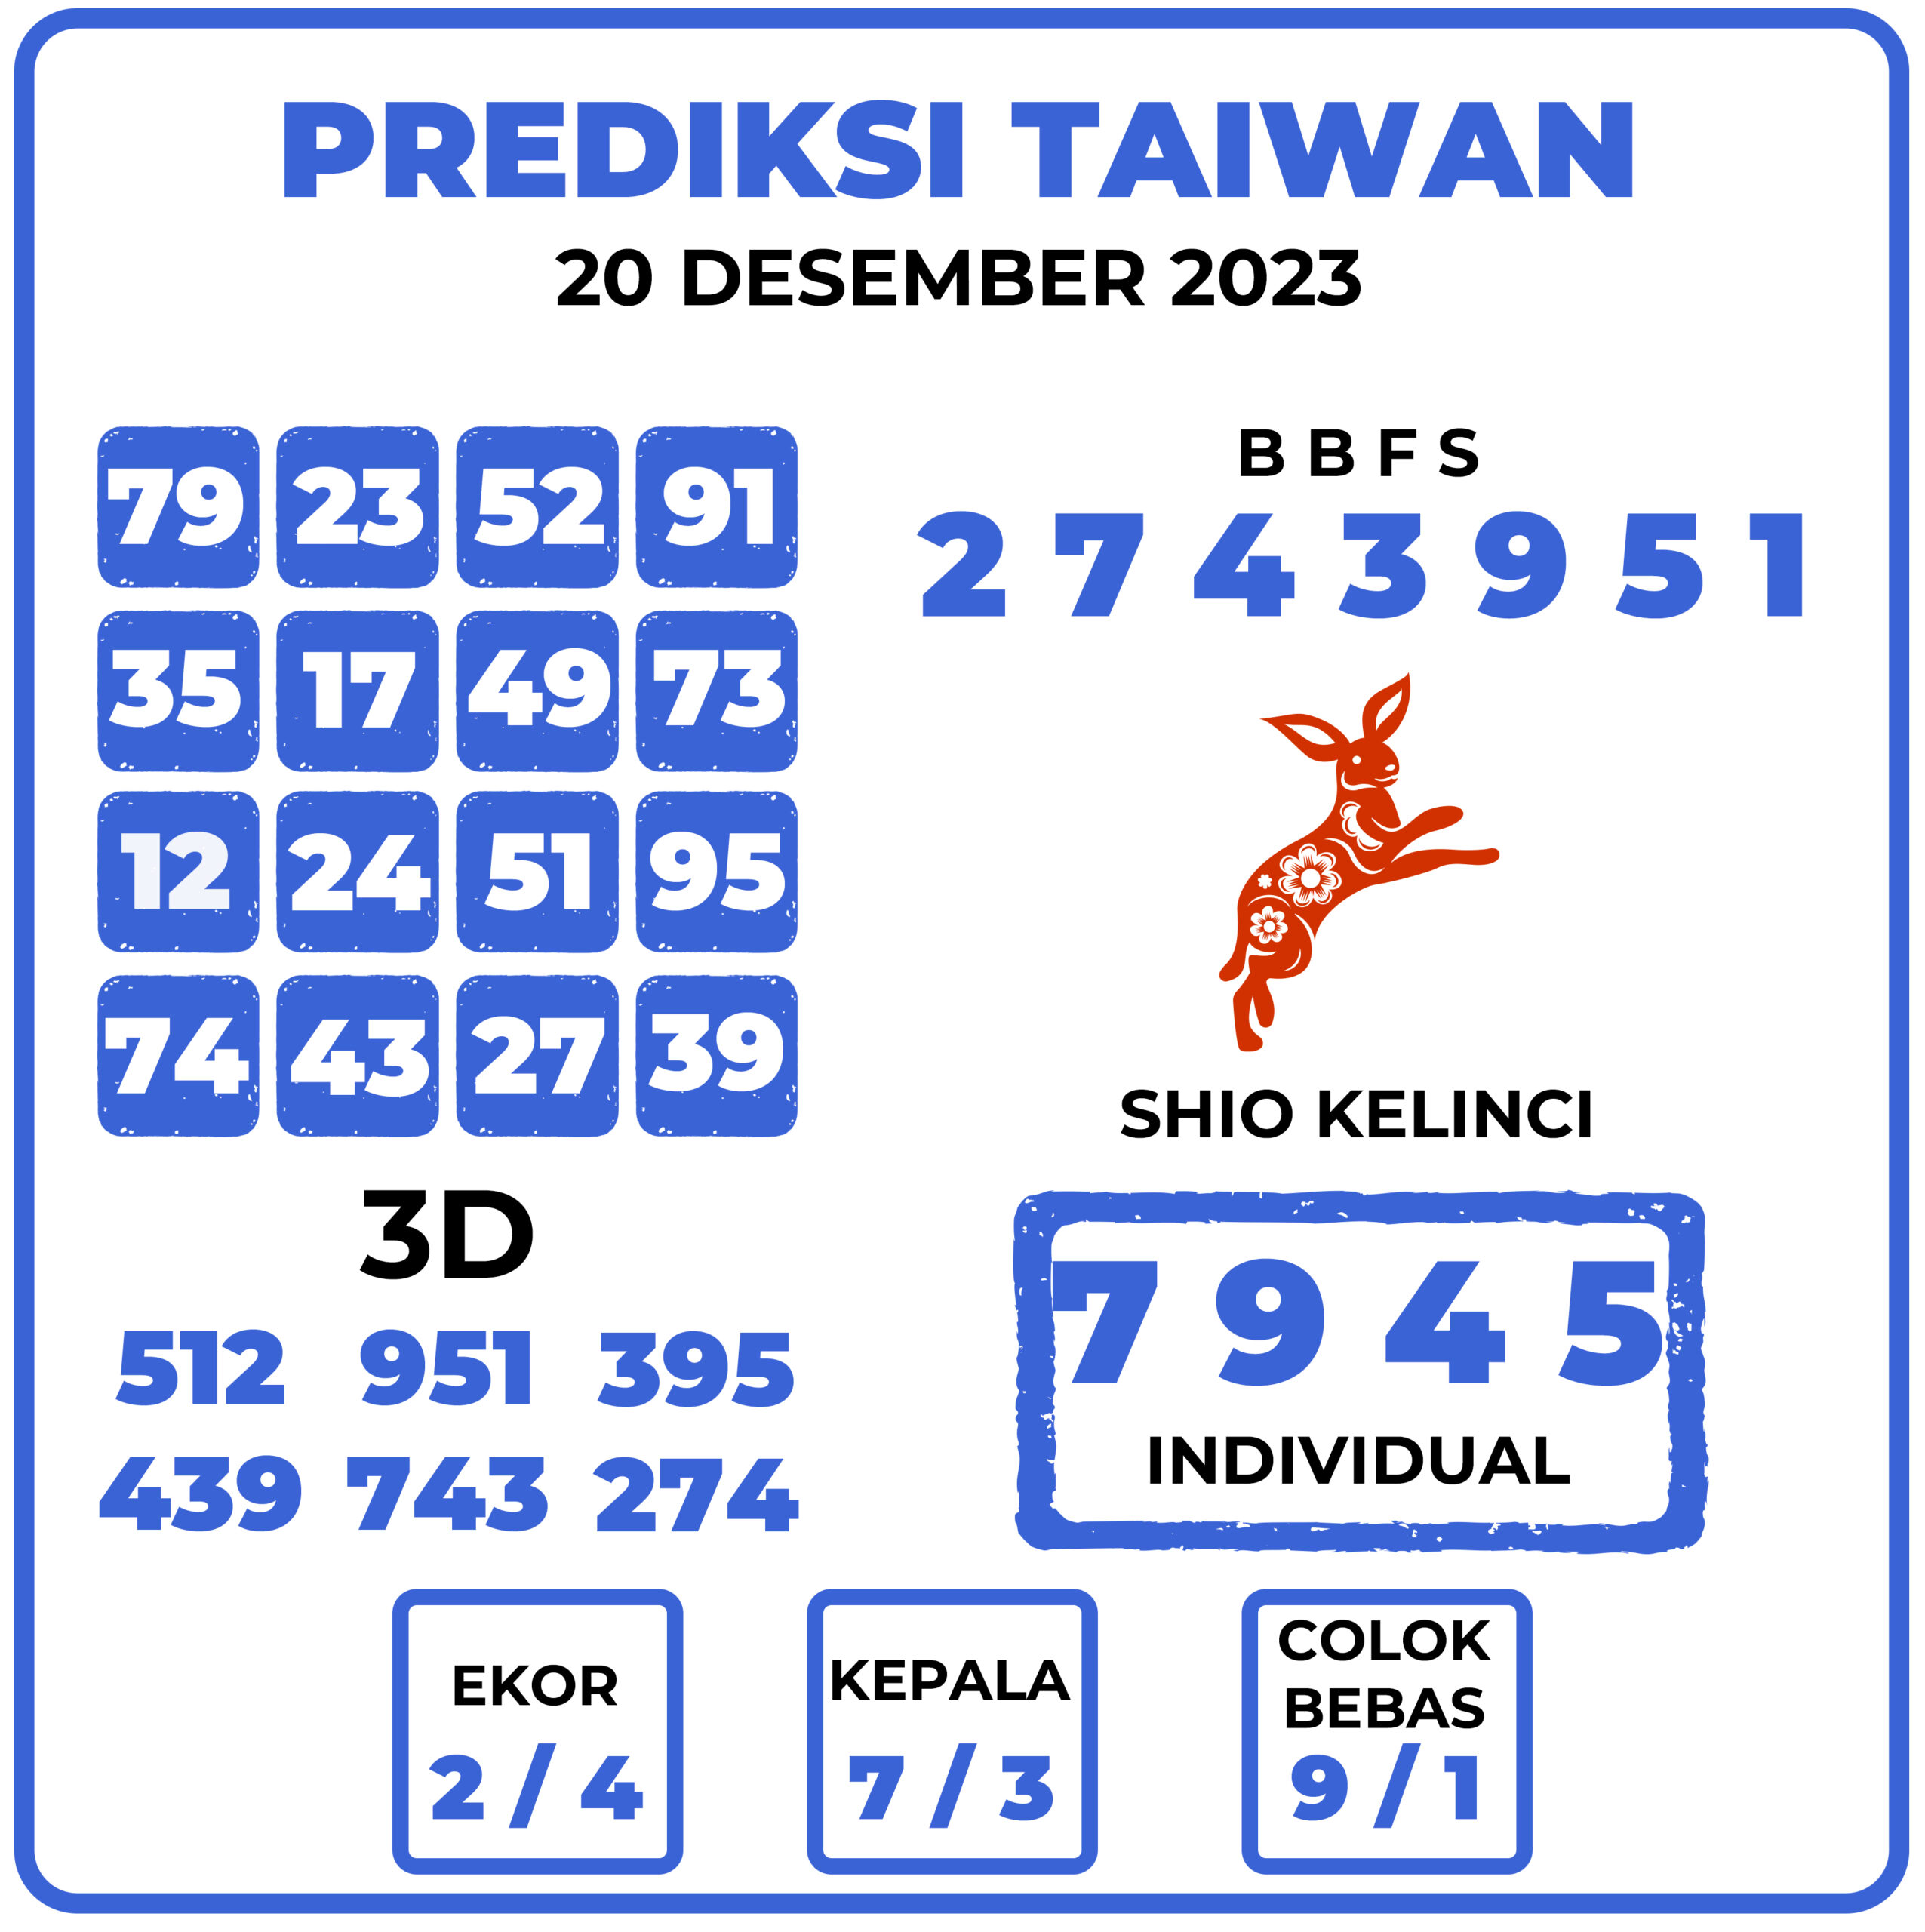 Prediksi Togel Taiwan 20 Desember 2023